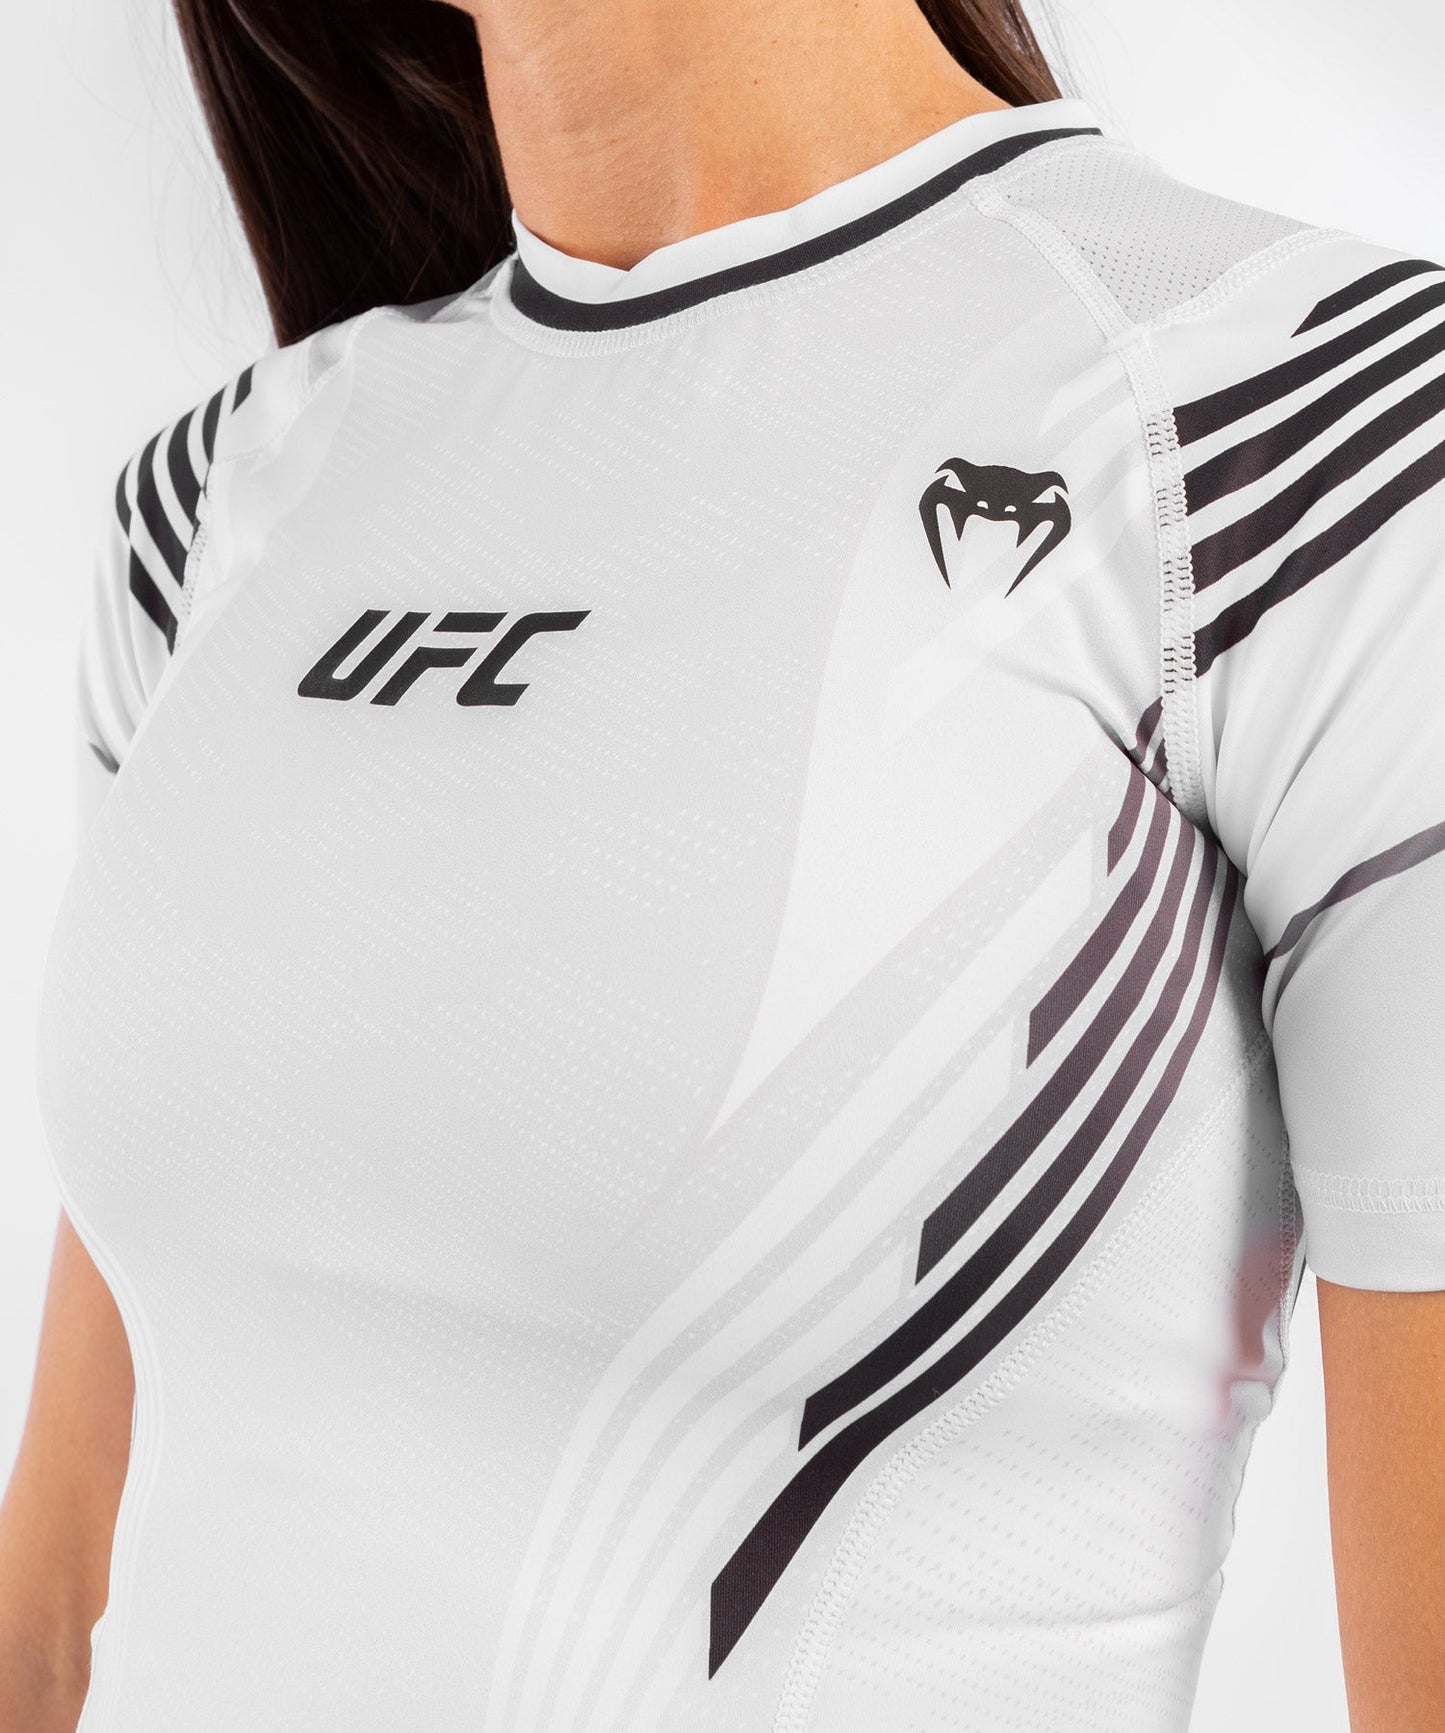 UFC Venum Authentic Fight Night Women's Rashguard - White